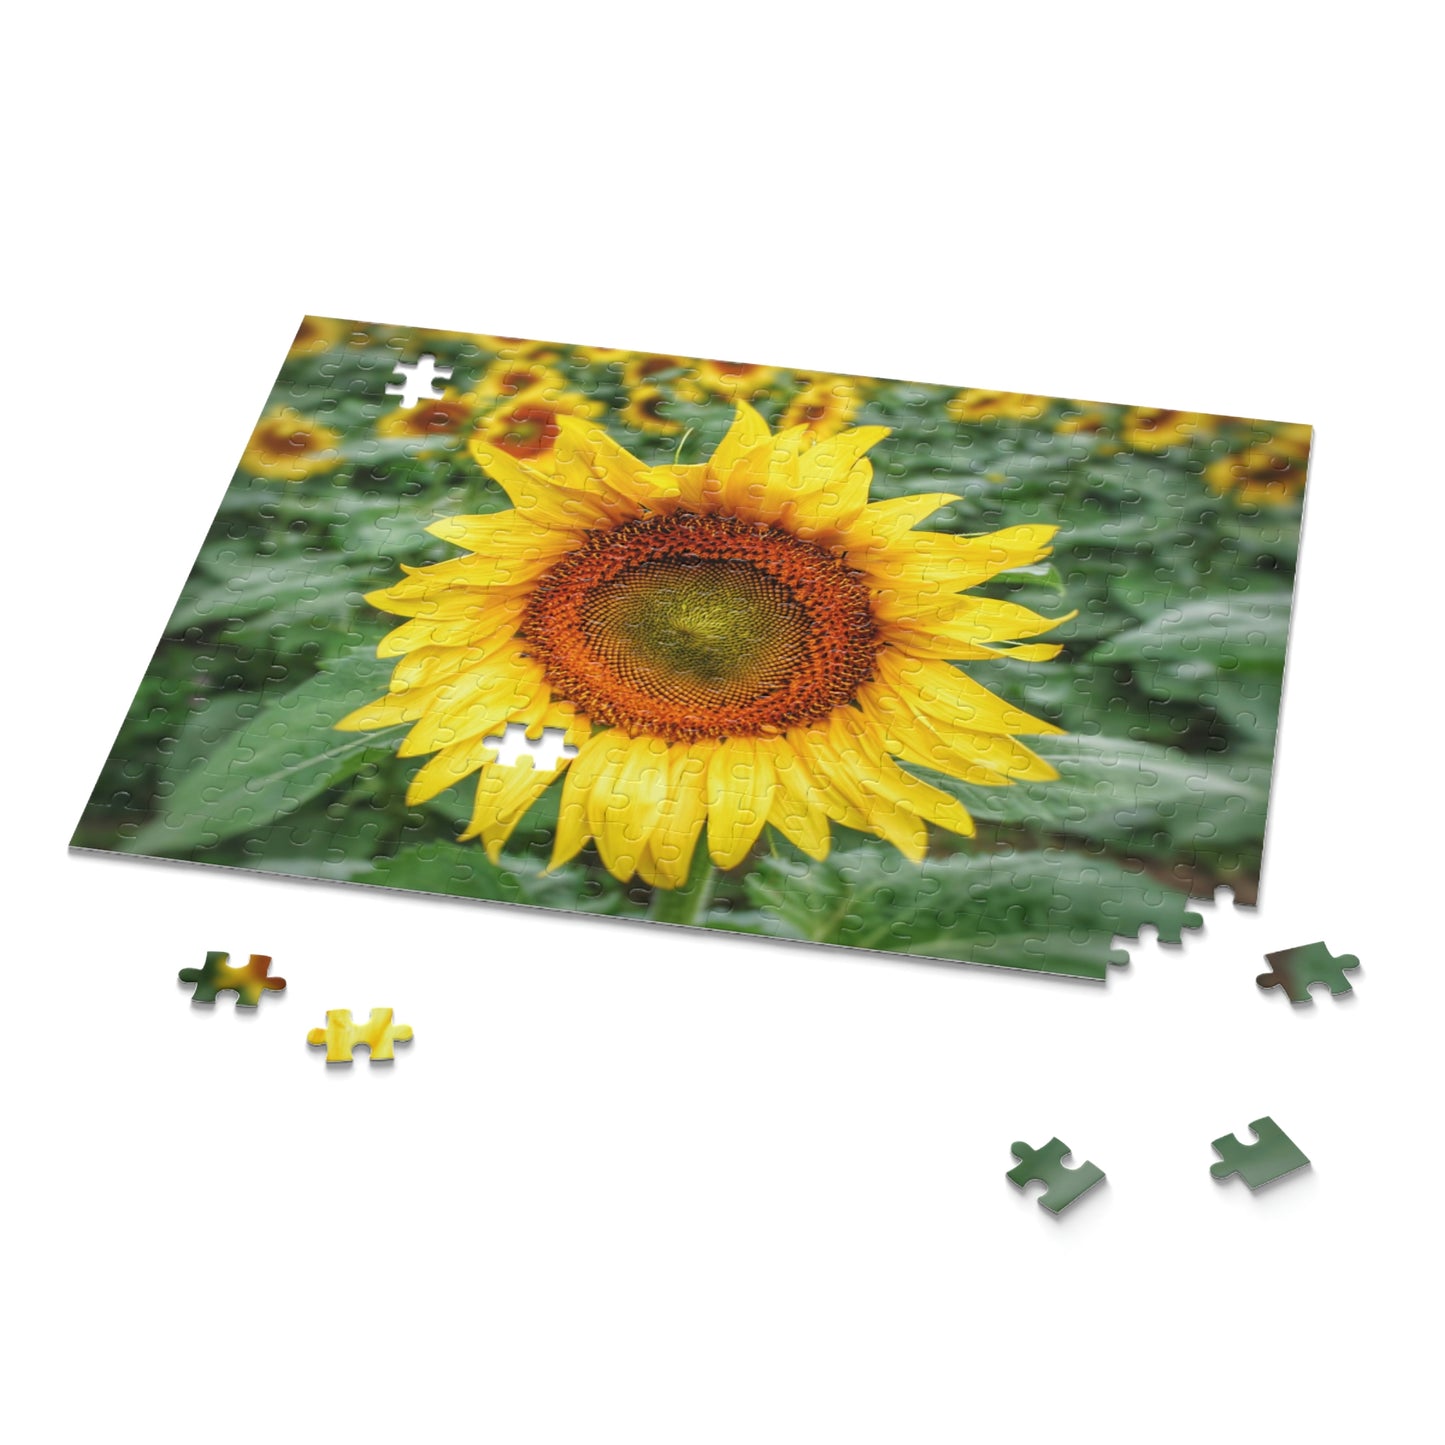 252 Piece Sunflower Puzzle!